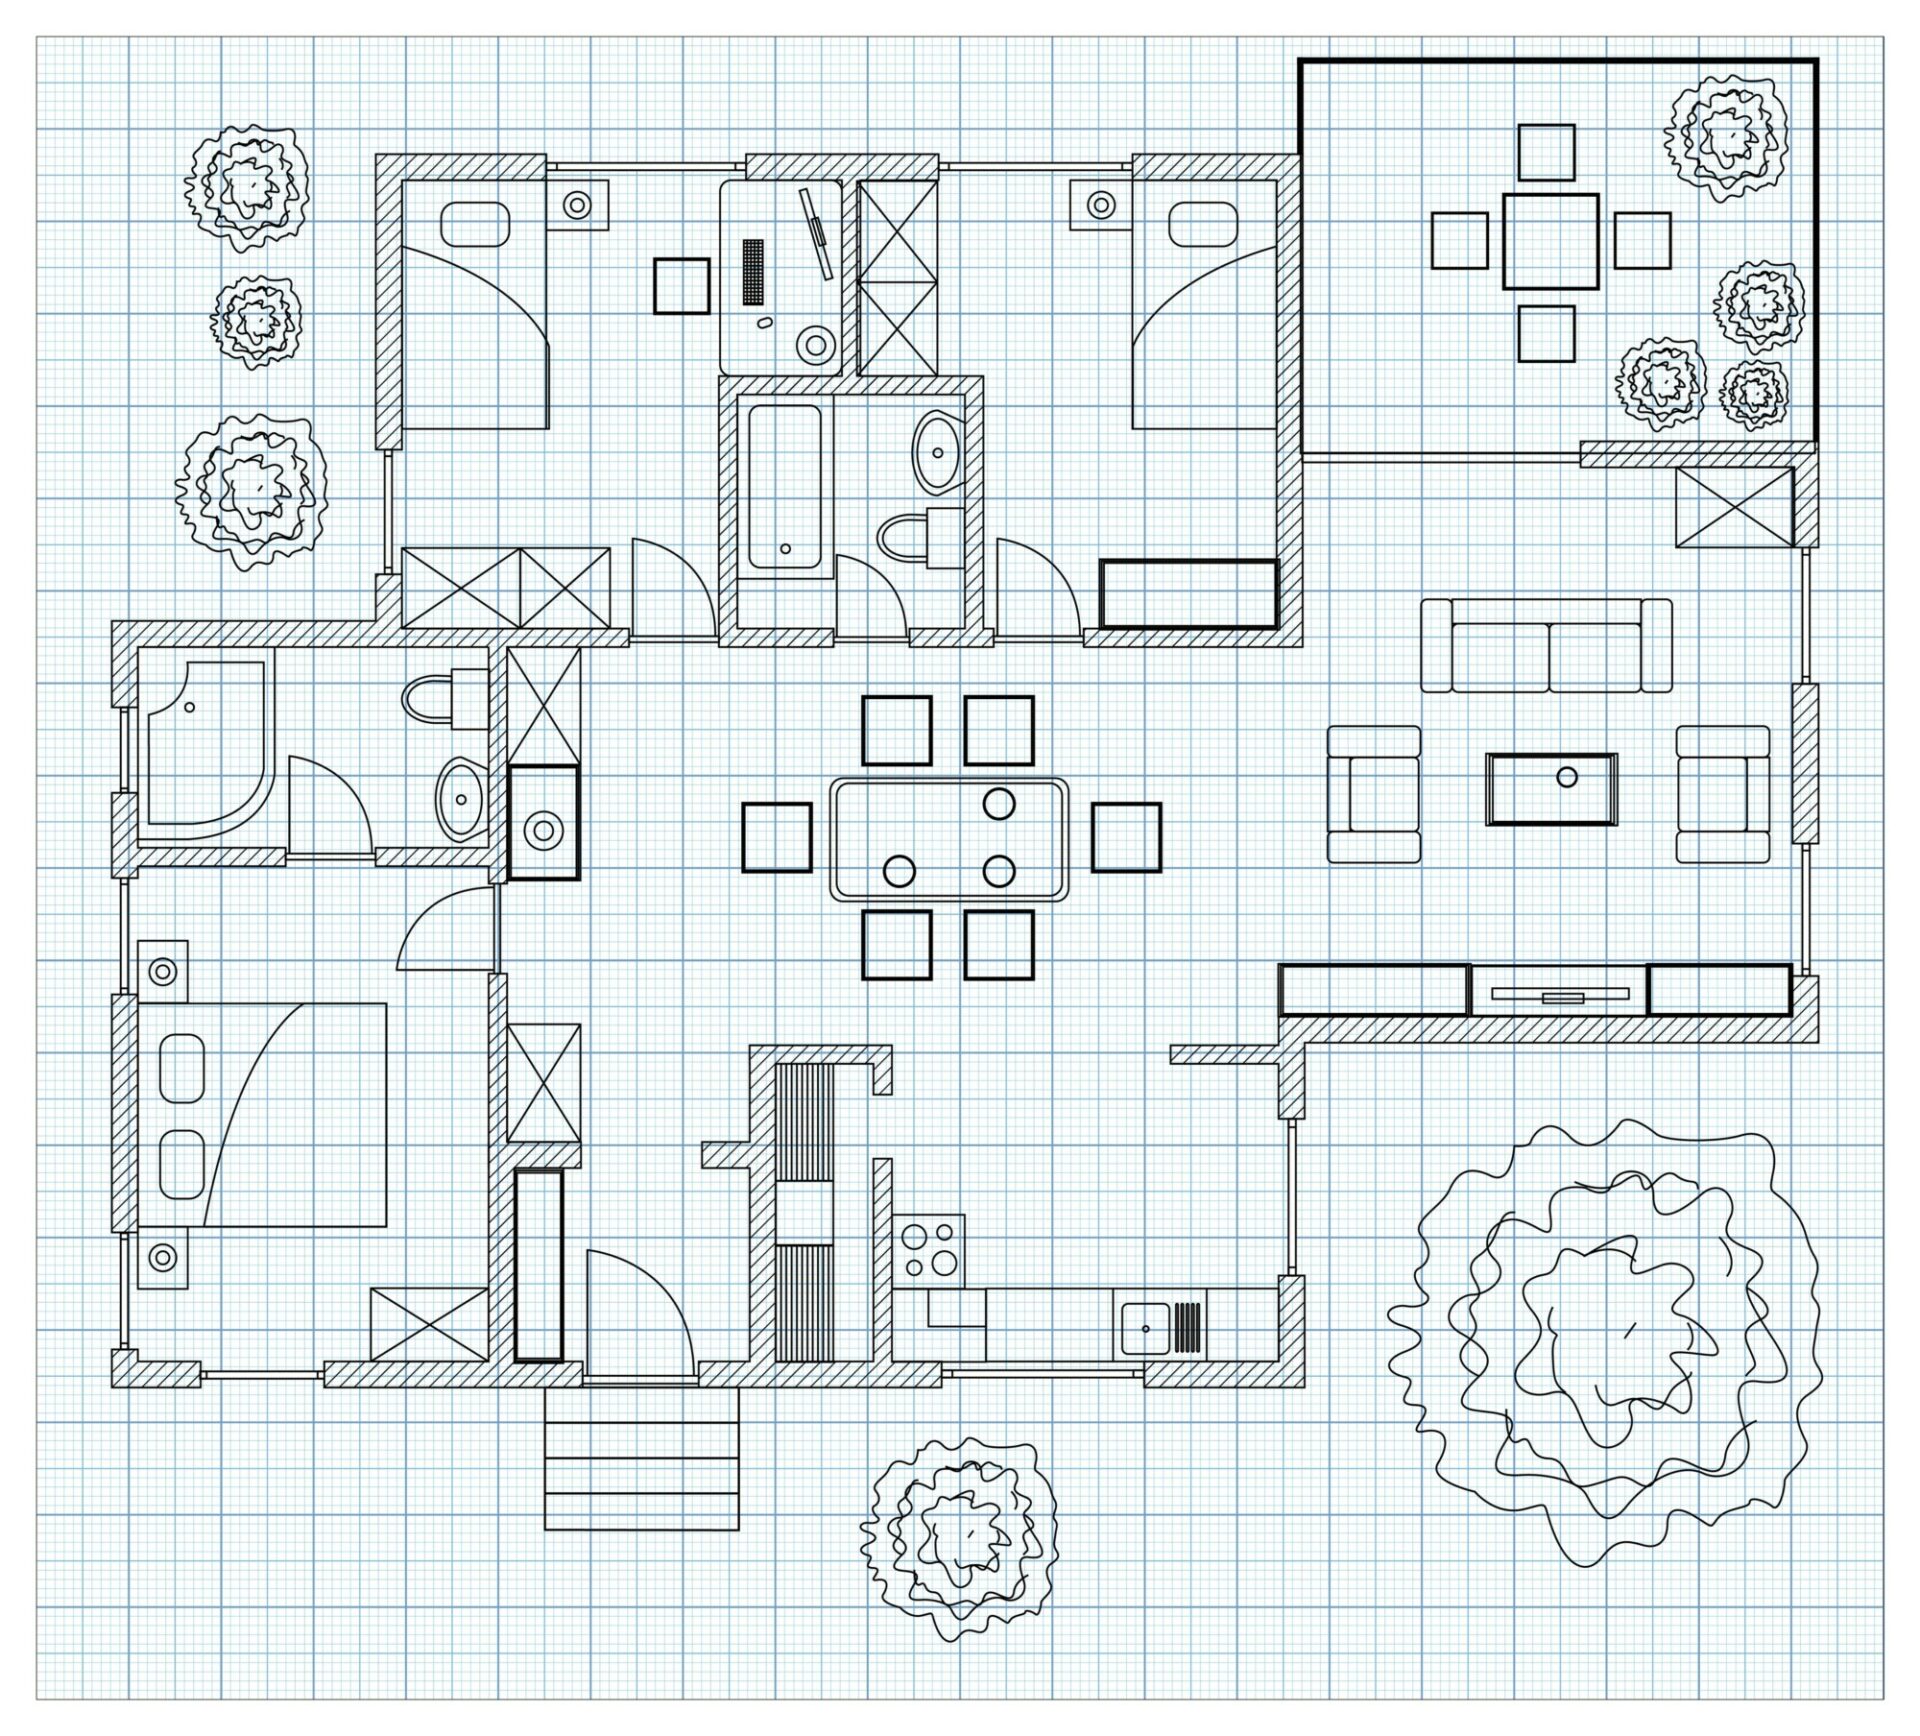 Bad floor plan layout